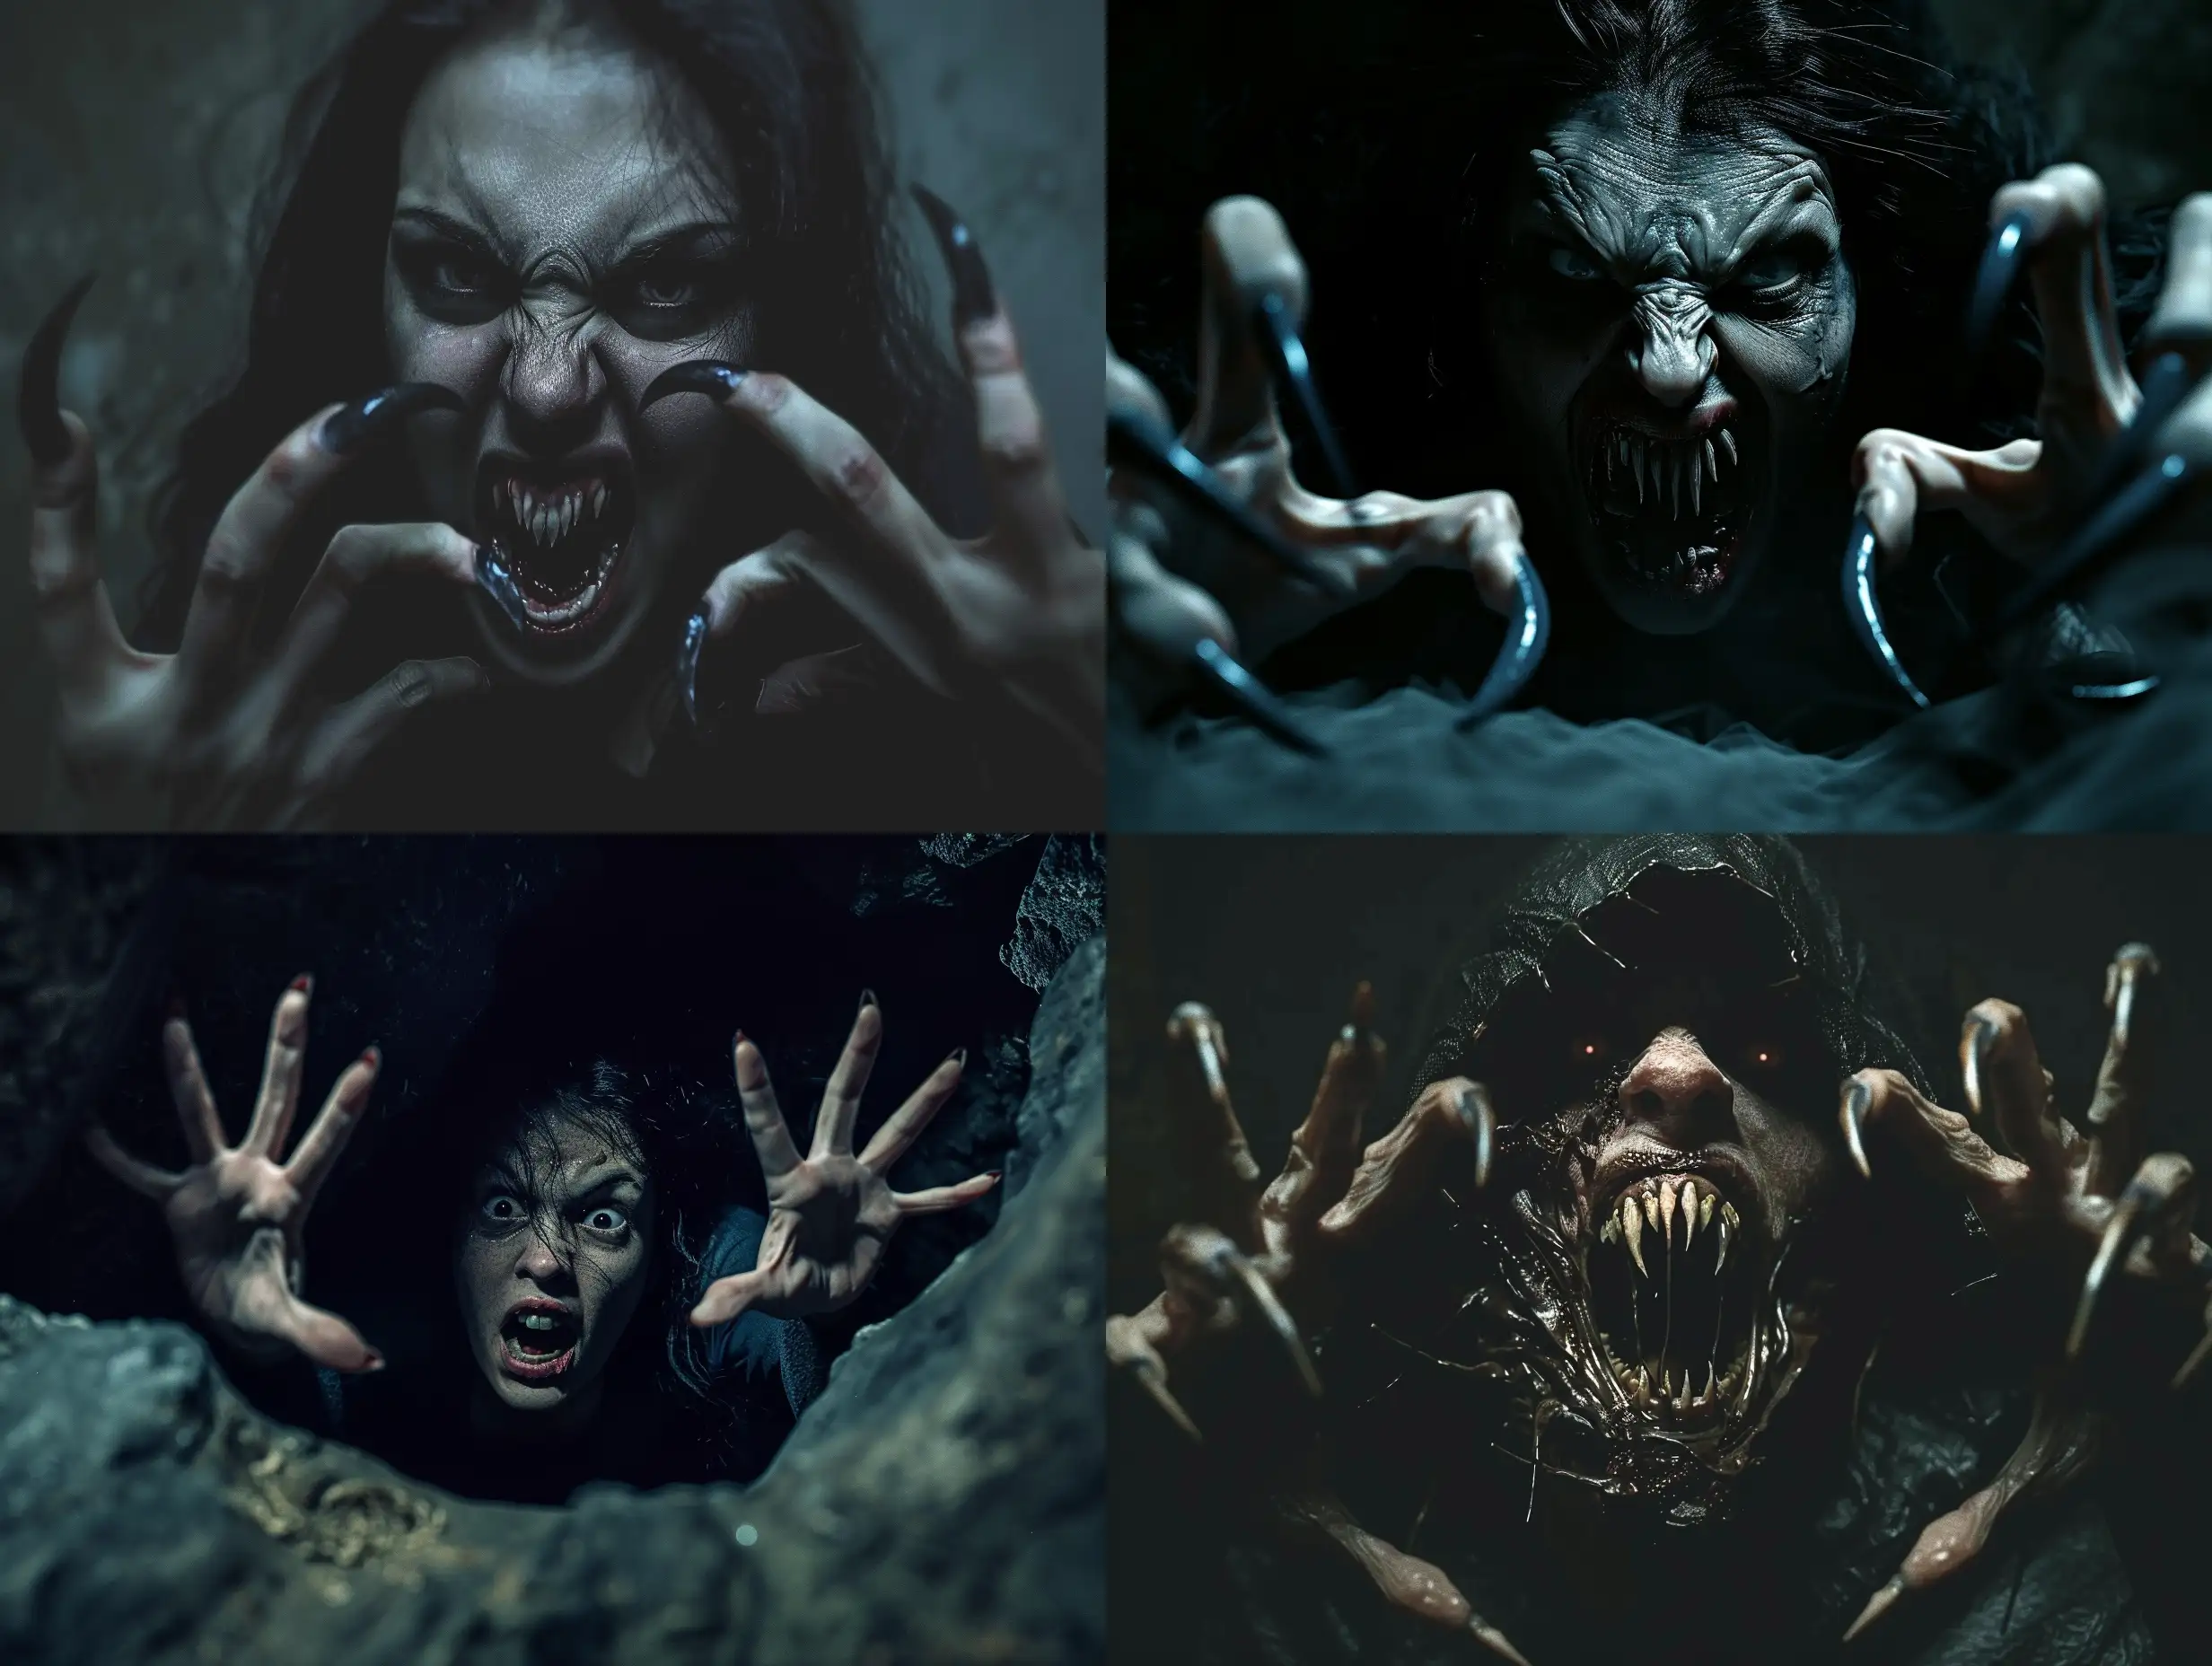 Eerie-Vampire-Woman-Emerging-from-Darkness-in-HyperRealistic-Scene